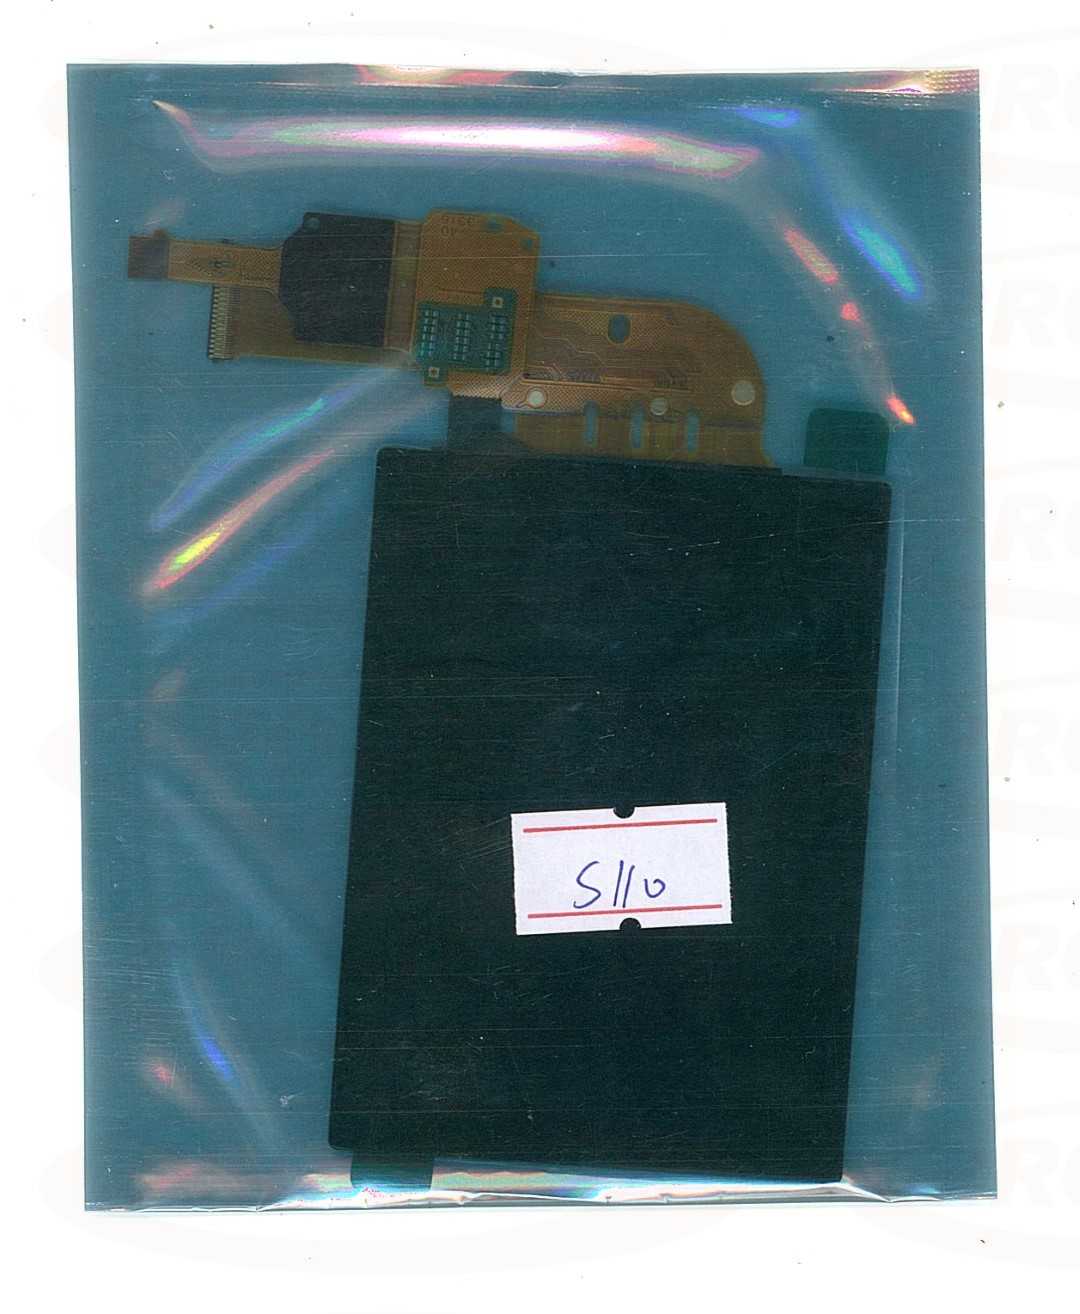 LCD CANON S110, POWERSHOT S110V (PC1819)